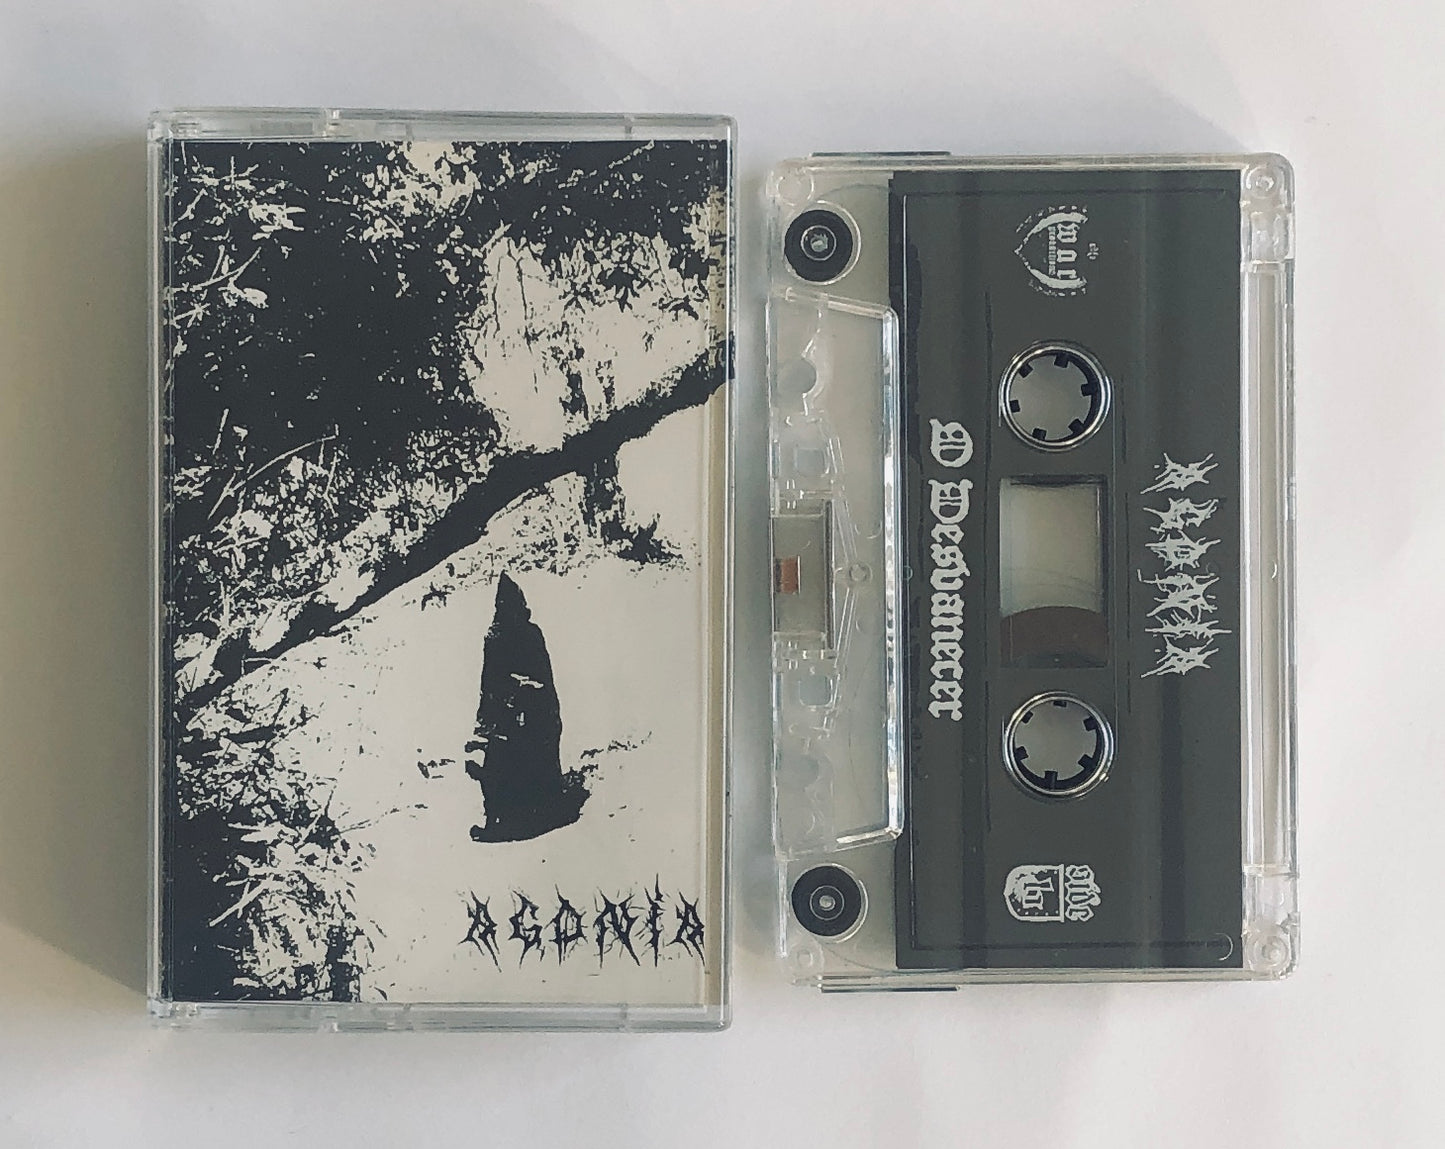 Agonia (Pt) "O Desvanecer" - Pro Tape